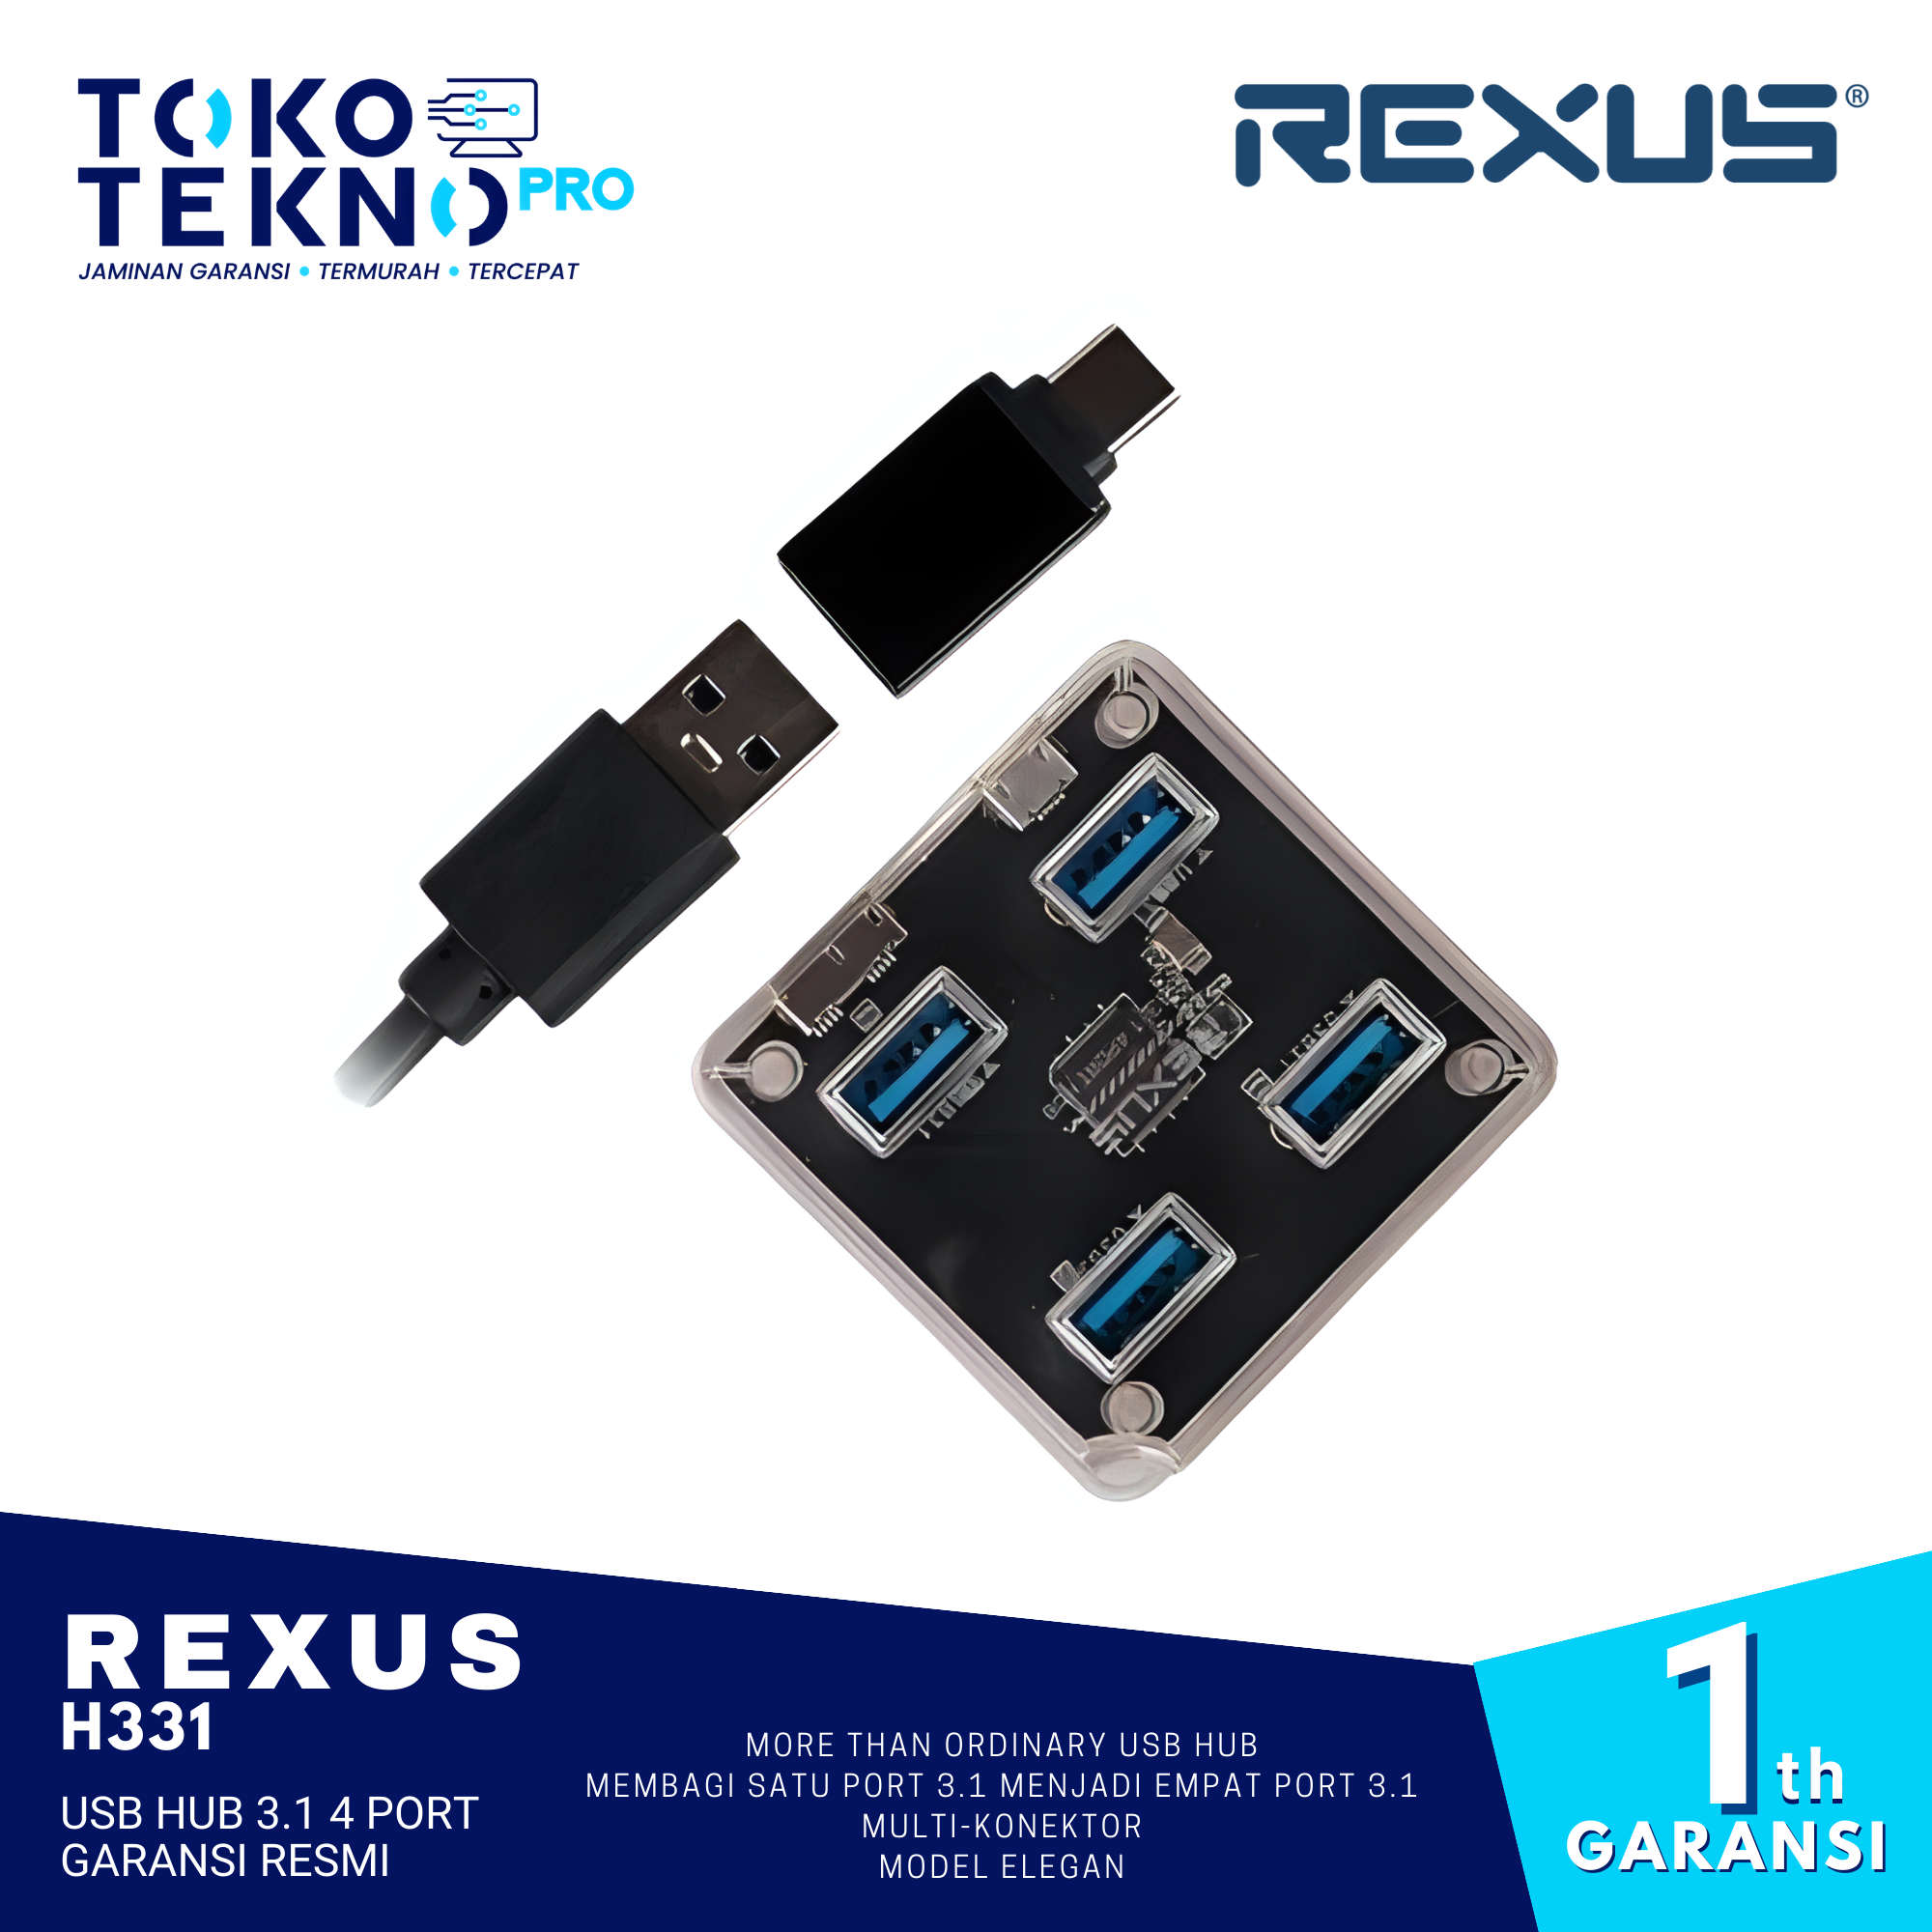 Rexus H331 USB Hub 3.1 4 Port